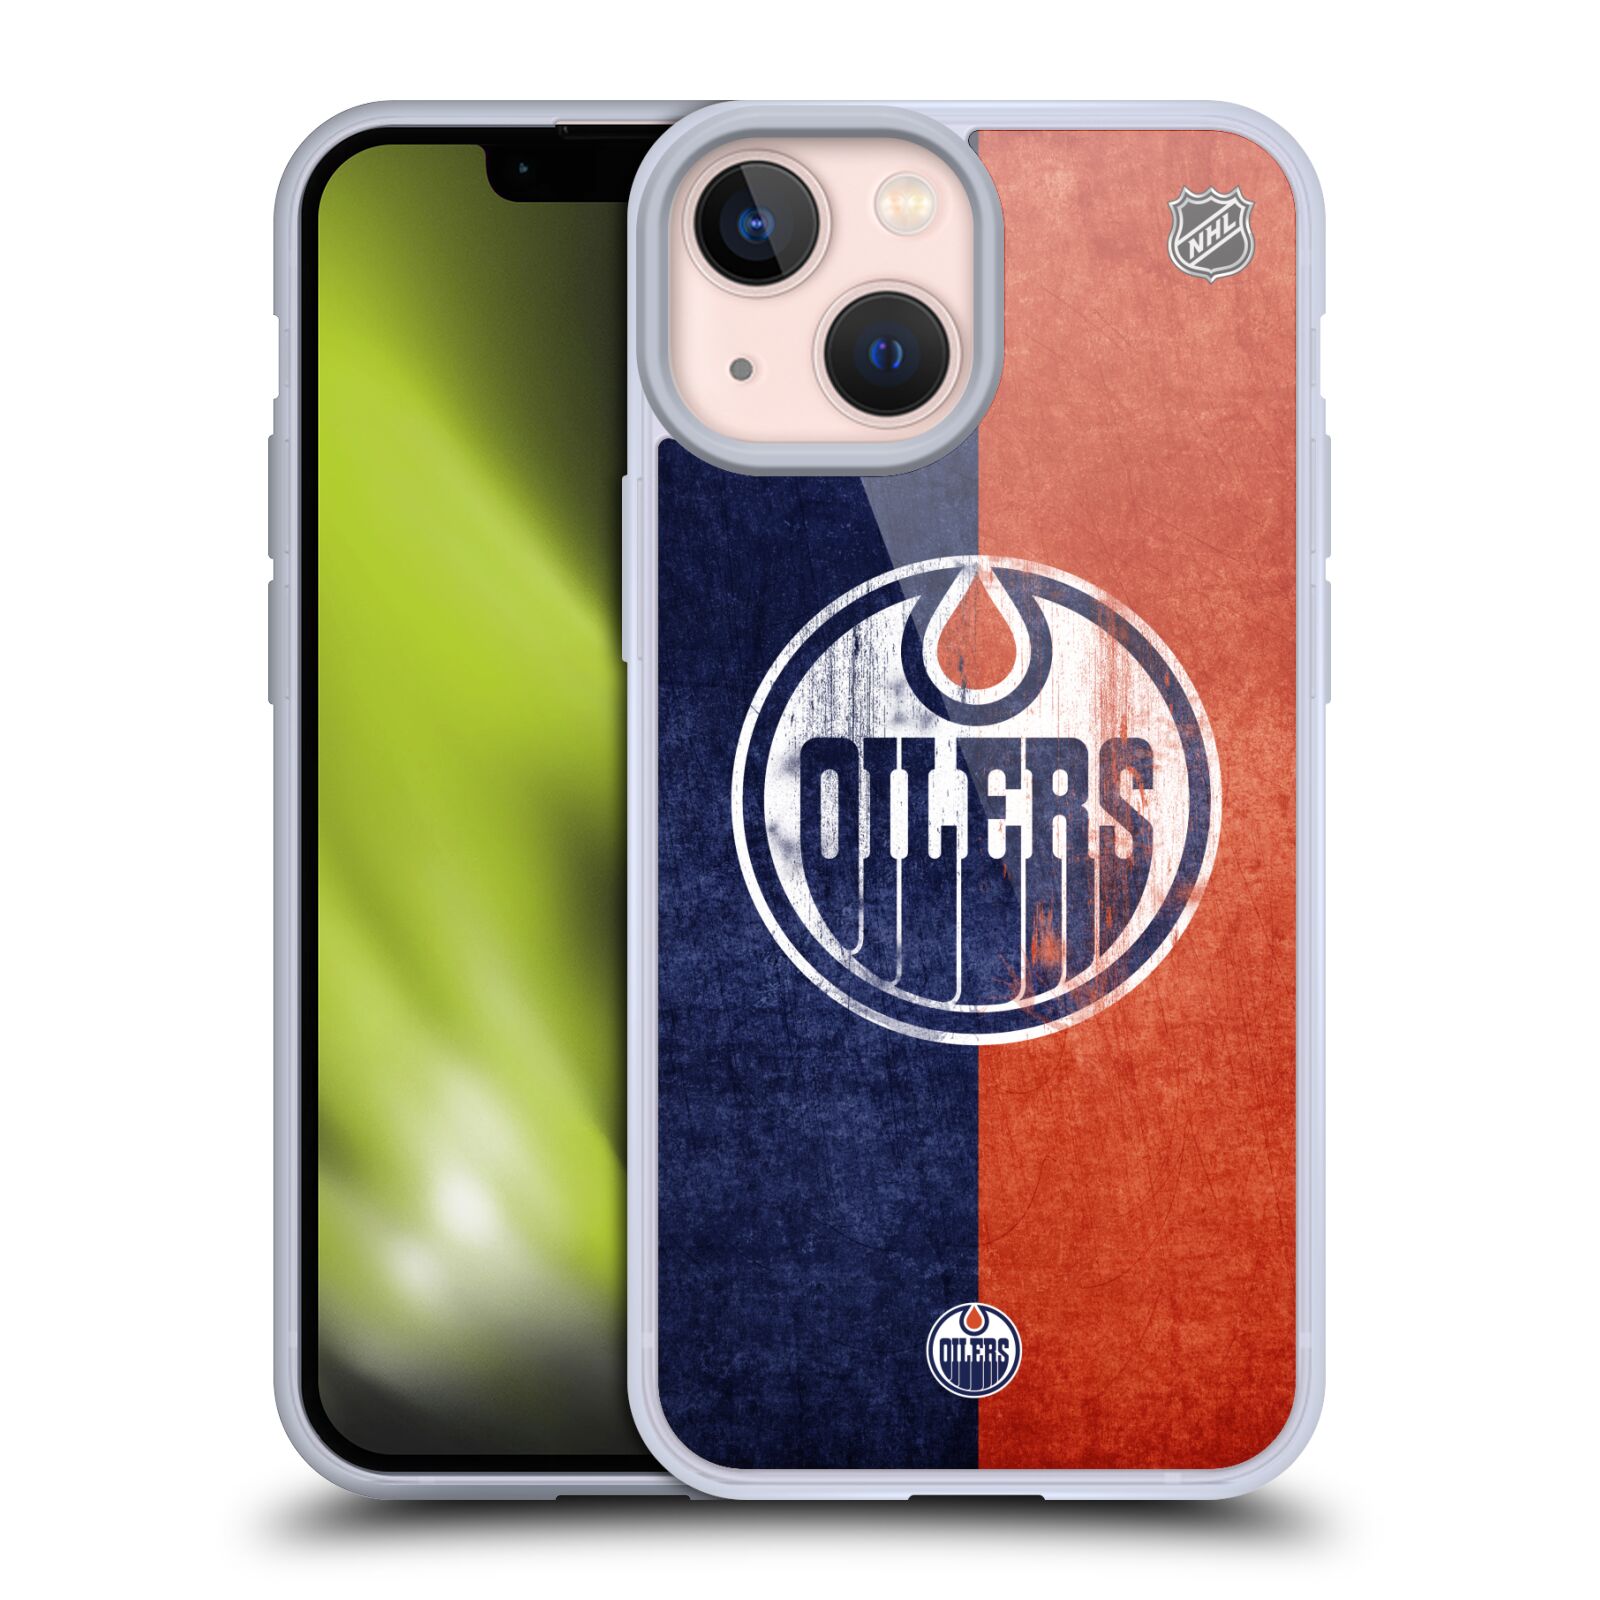 Silikonové pouzdro na mobil Apple iPhone 13 Mini - NHL - Půlené logo Edmonton Oilers (Silikonový kryt, obal, pouzdro na mobilní telefon Apple iPhone 13 Mini s licencovaným motivem NHL - Půlené logo Edmonton Oilers)